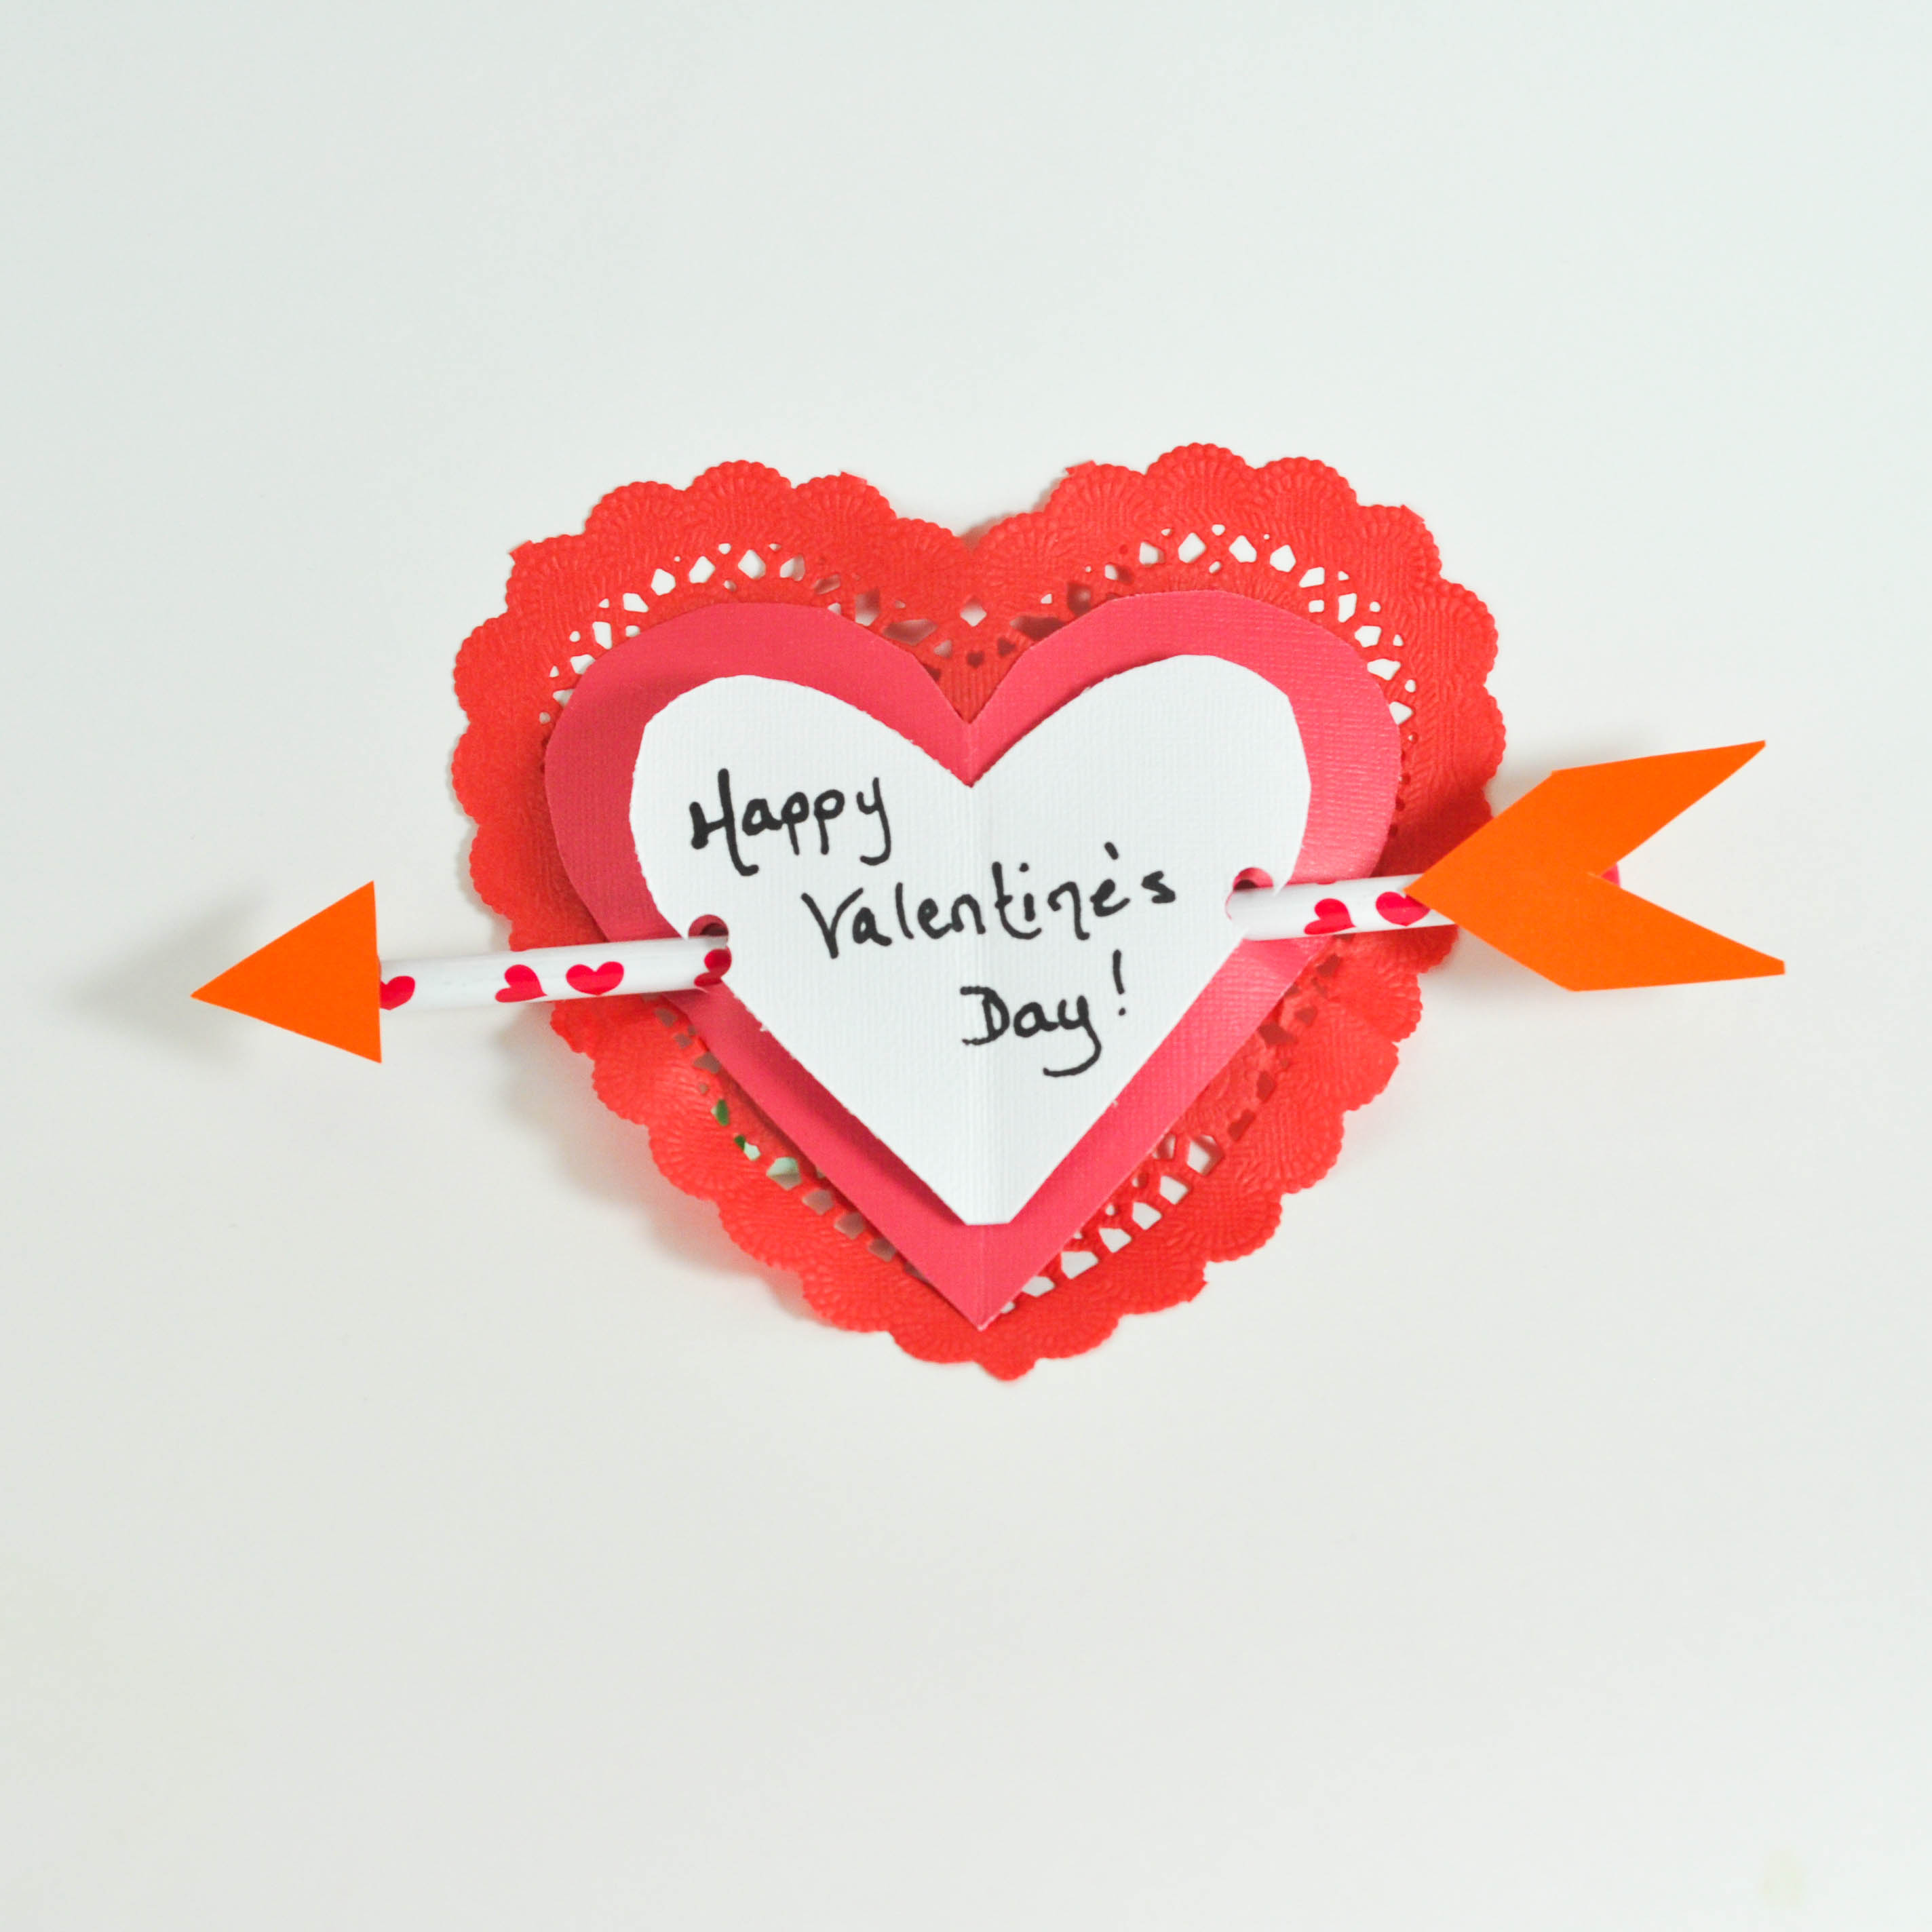  Handmade Felt Hearts, Christmas Tree Ornaments, Valentine's  Hearts pack of 10 : Handmade Products